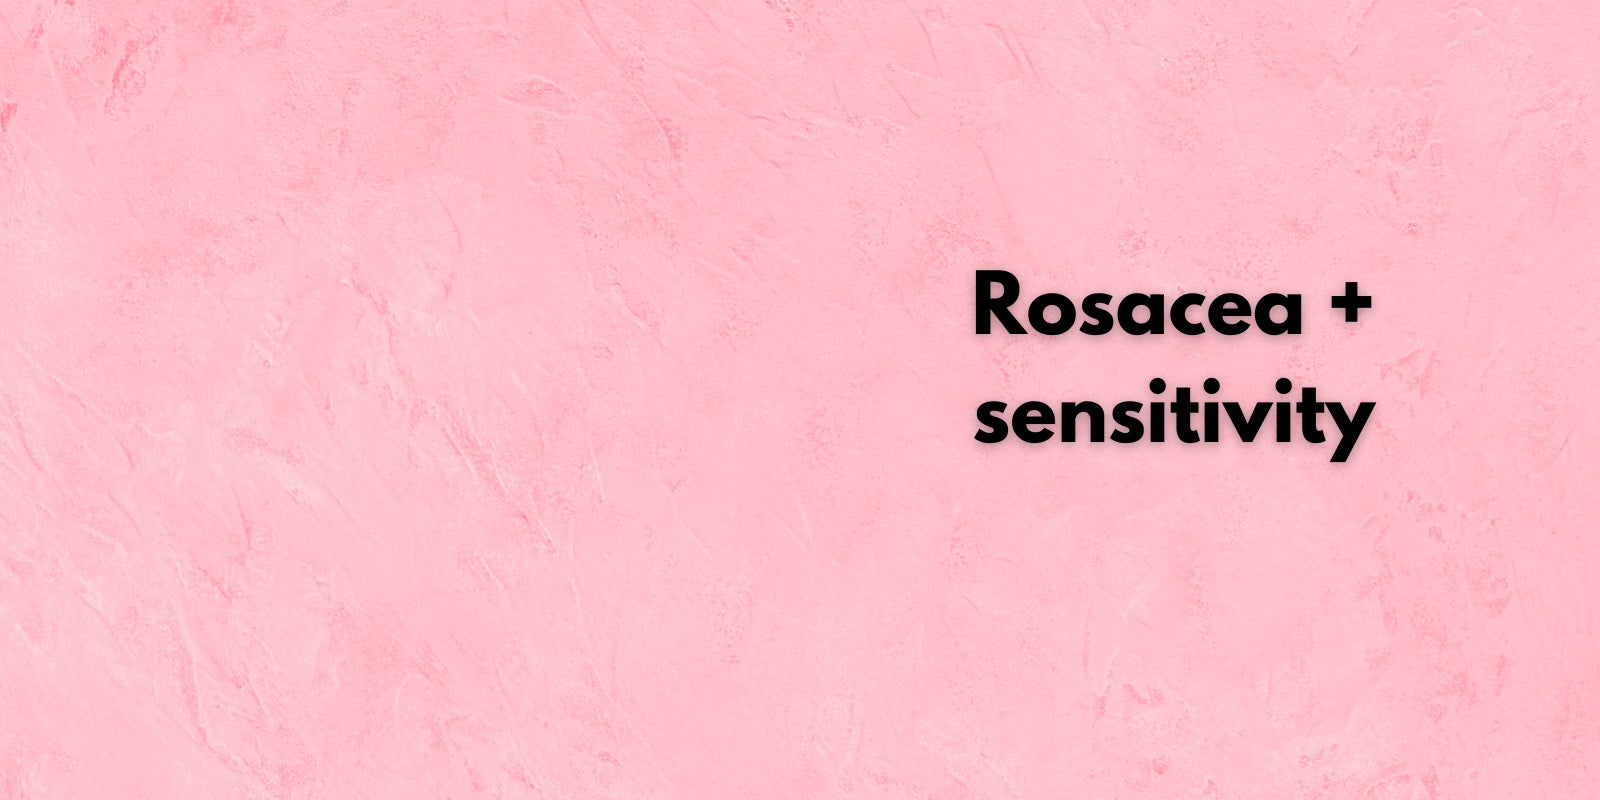 menopause + rosacea + sensitized skin